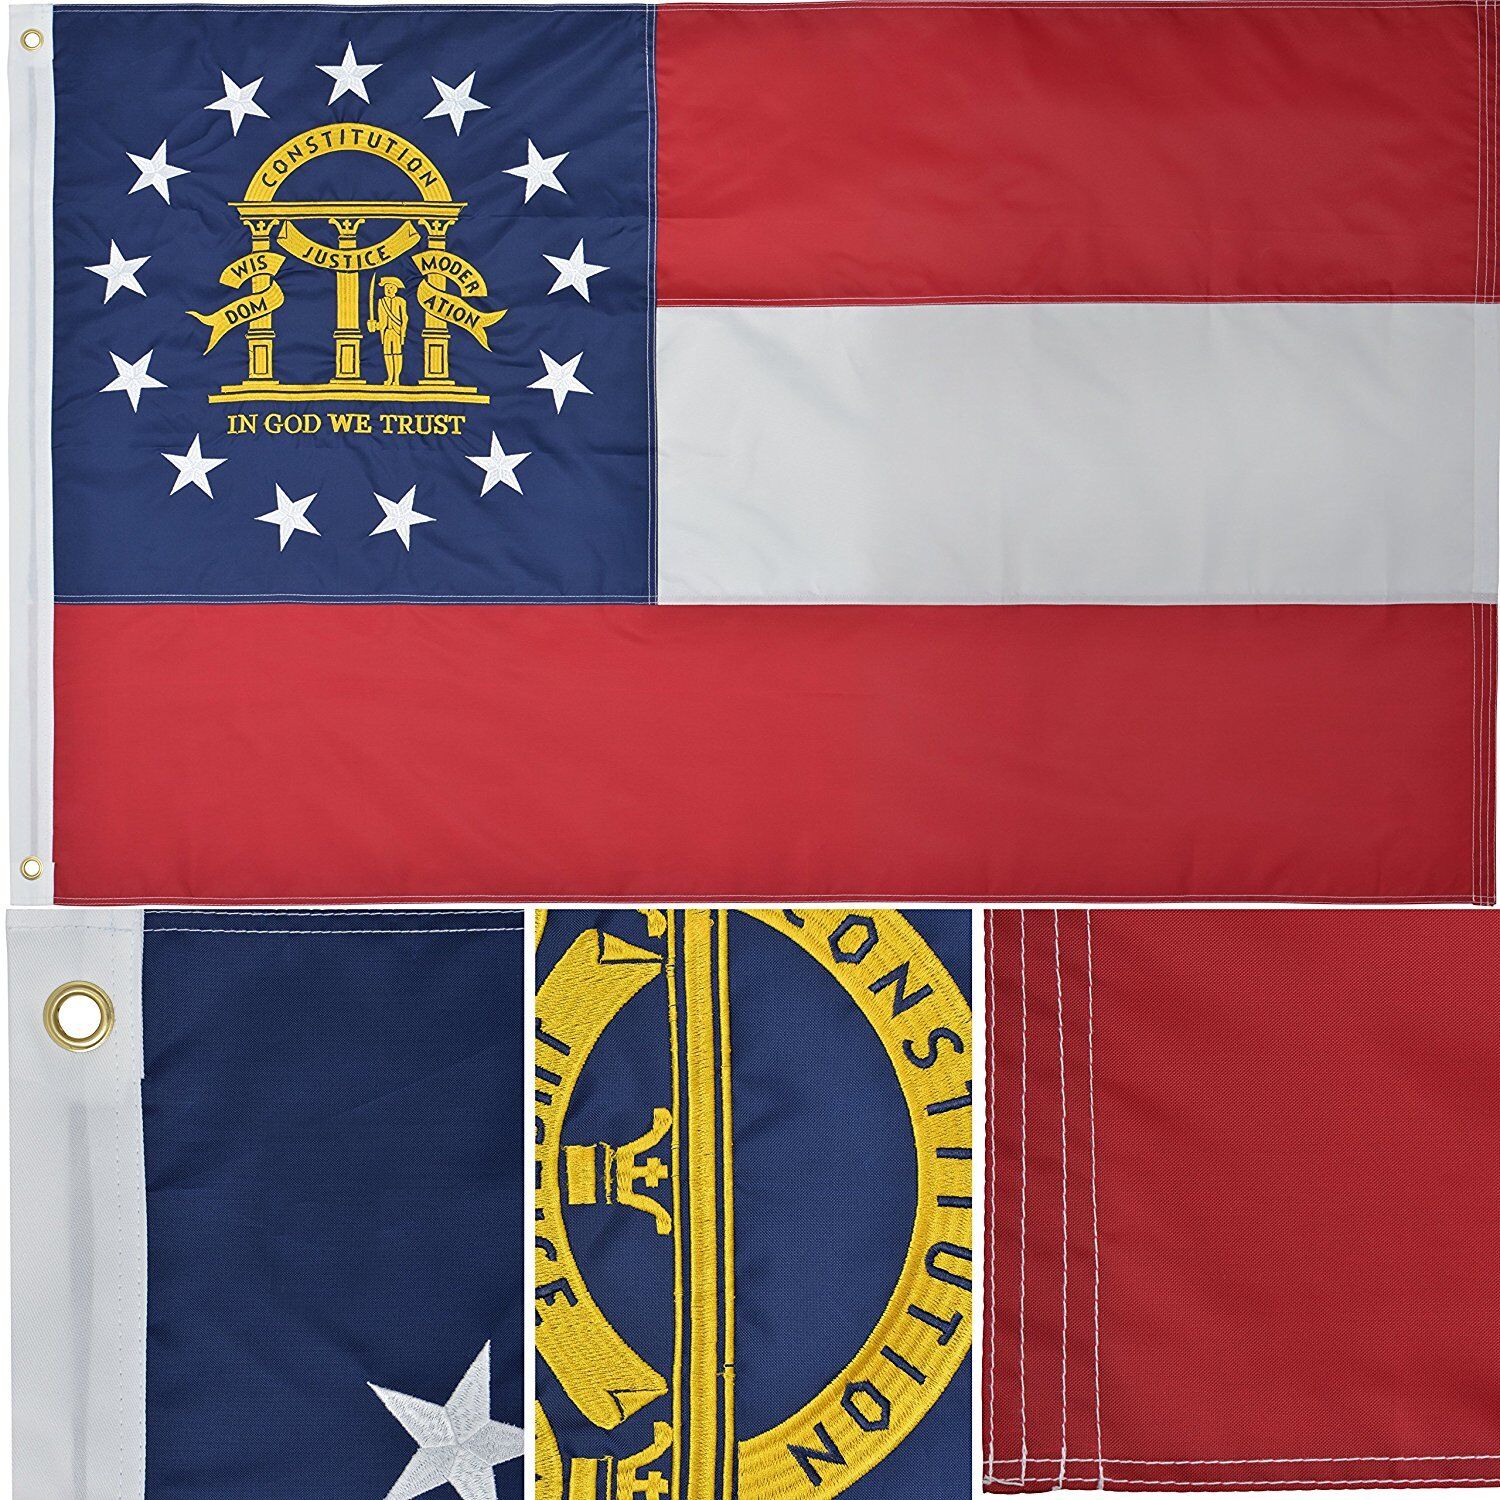 Georgia State Flag 3' x 5' Ft 210D Nylon Premium Outdoor Embroidered Flag Banner